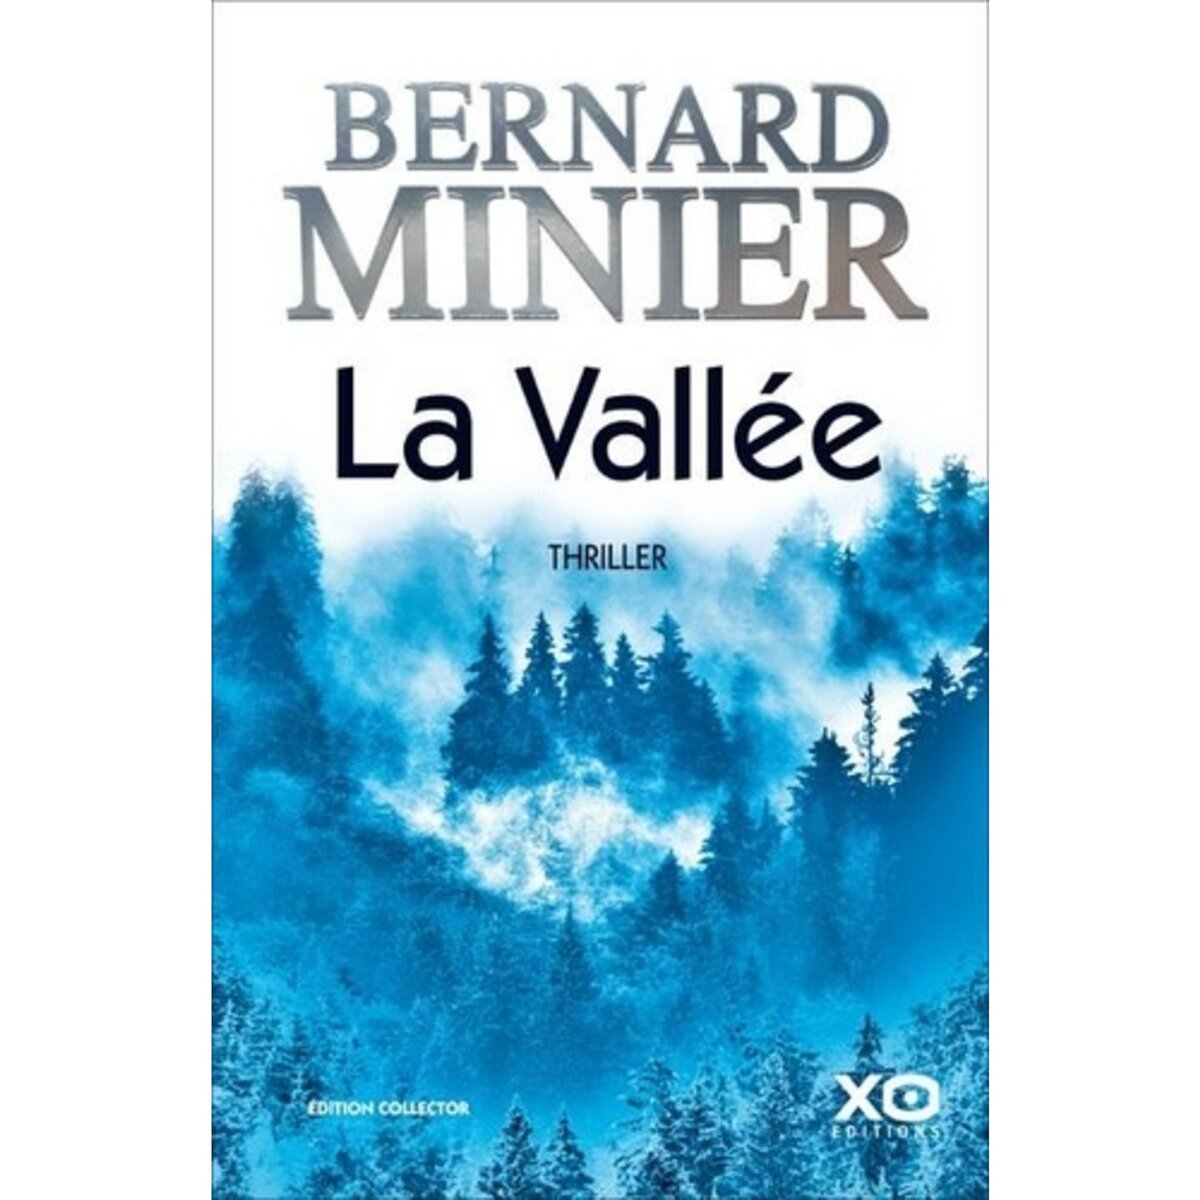  LA VALLEE, Minier Bernard